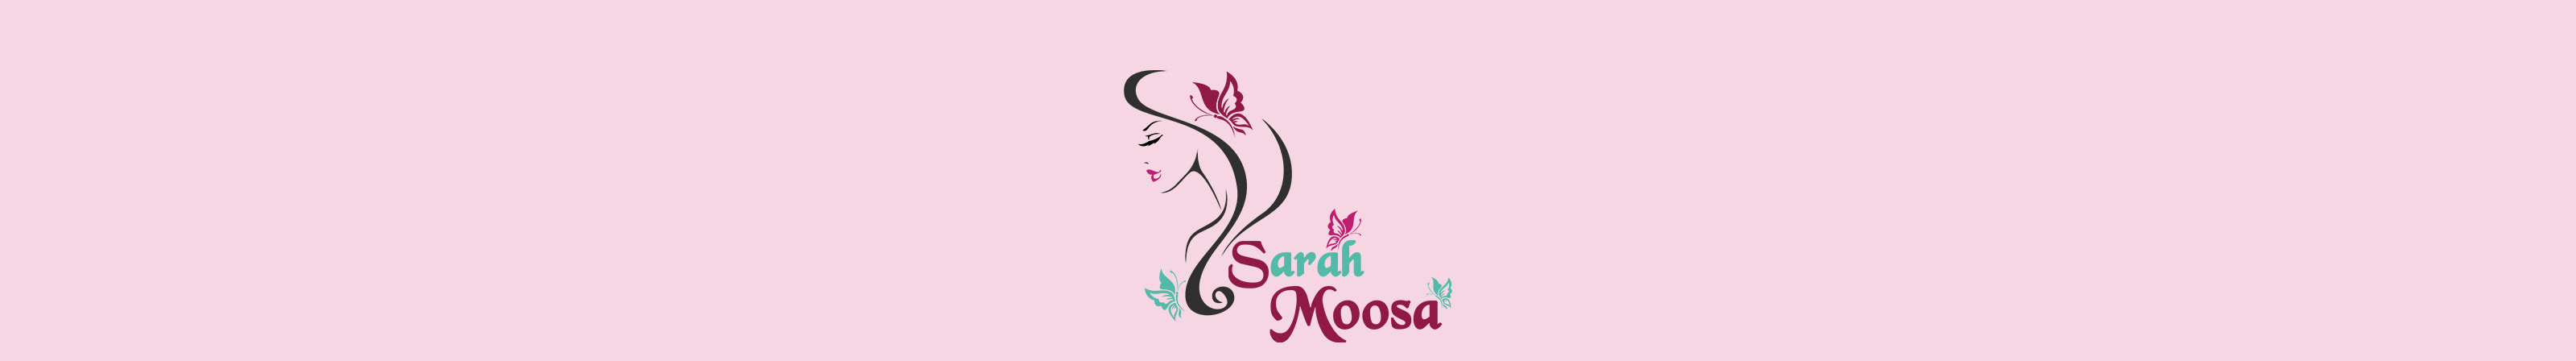 Bannière de profil de sarah moosa